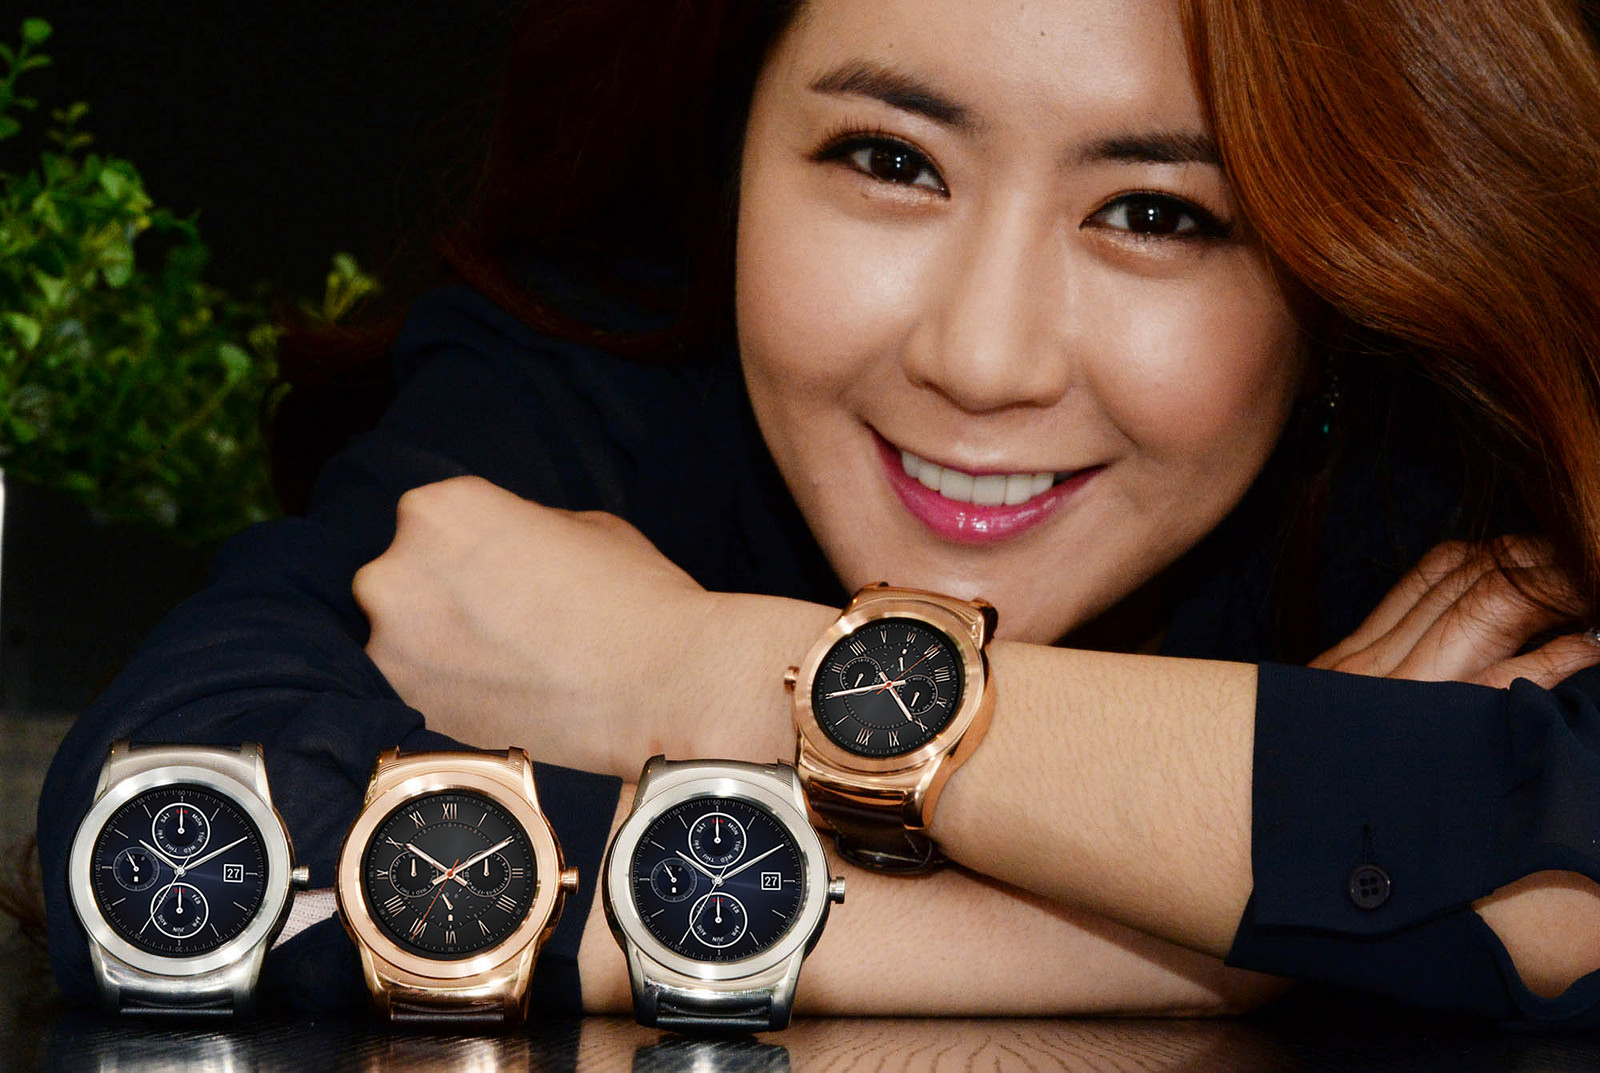 The LG Watch Urbane6 | G watch R | [ข่าว] LG Watch Urbane พร้อมเปิดตัวอย่างเป็นทางการในเดือนนี้ผ่าน Google Store